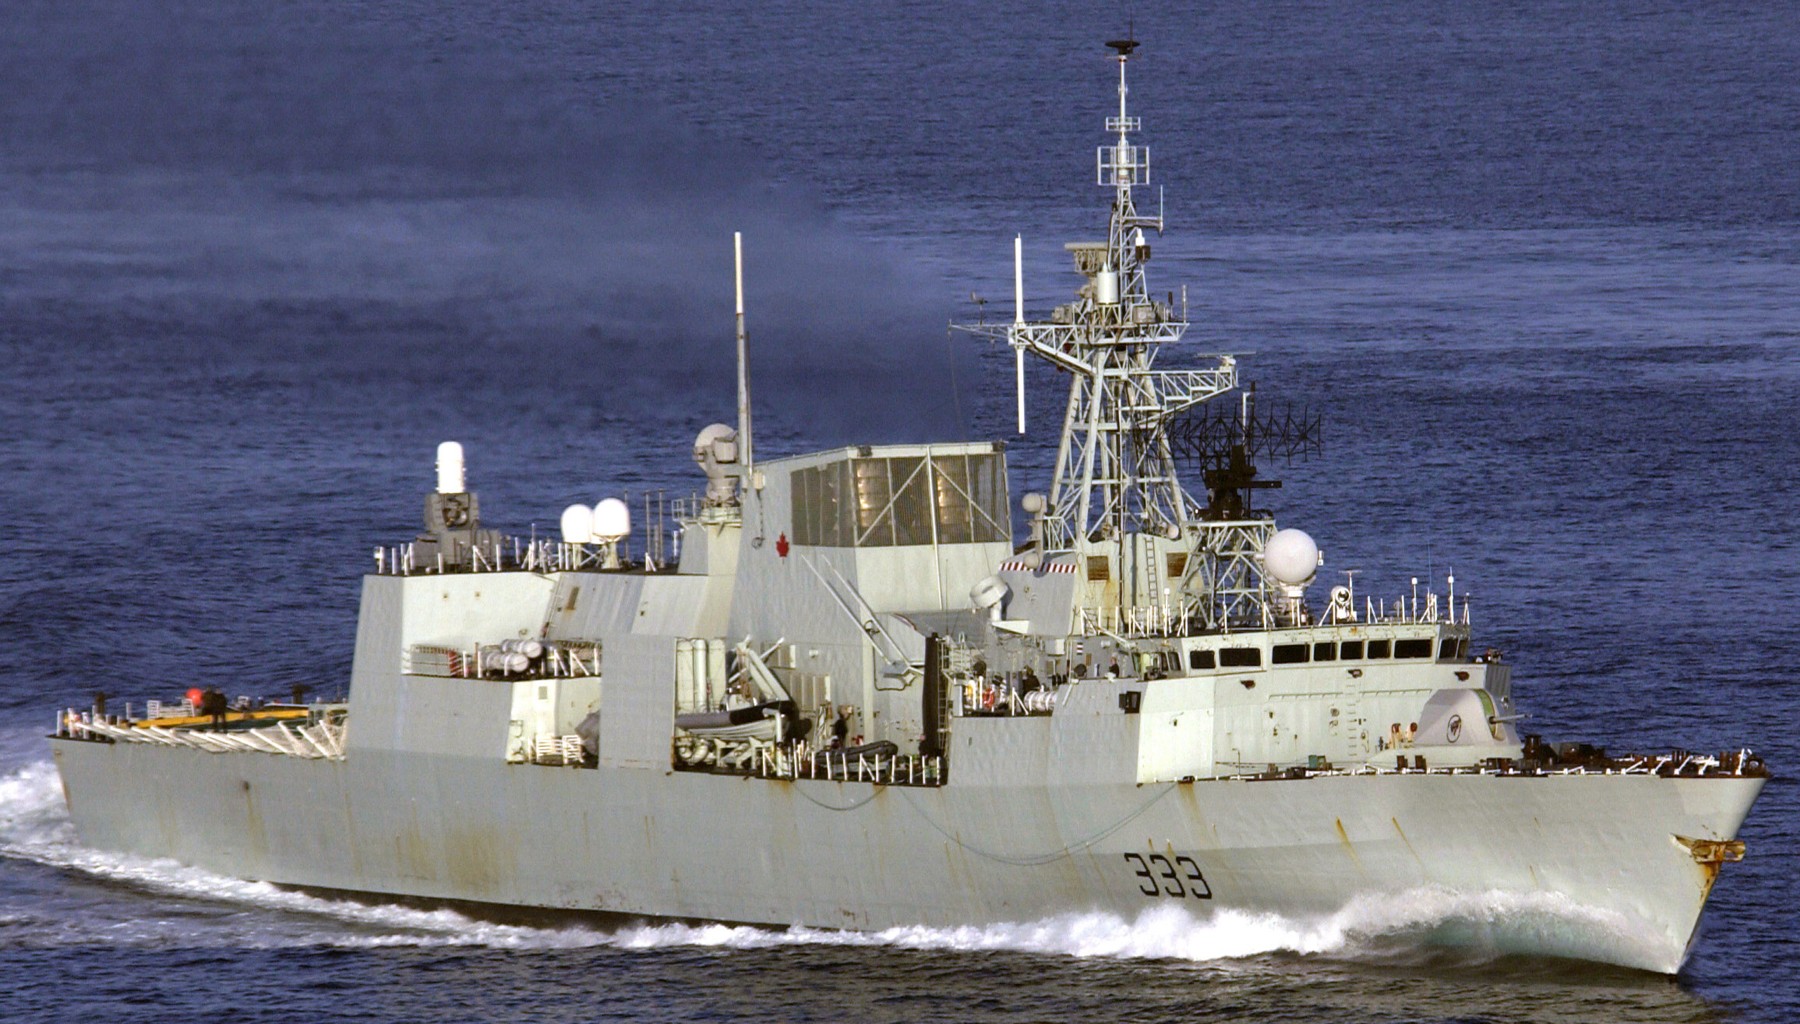 ffh-333 hmcs toronto halifax class helicopter patrol frigate ncsm royal canadian navy 06